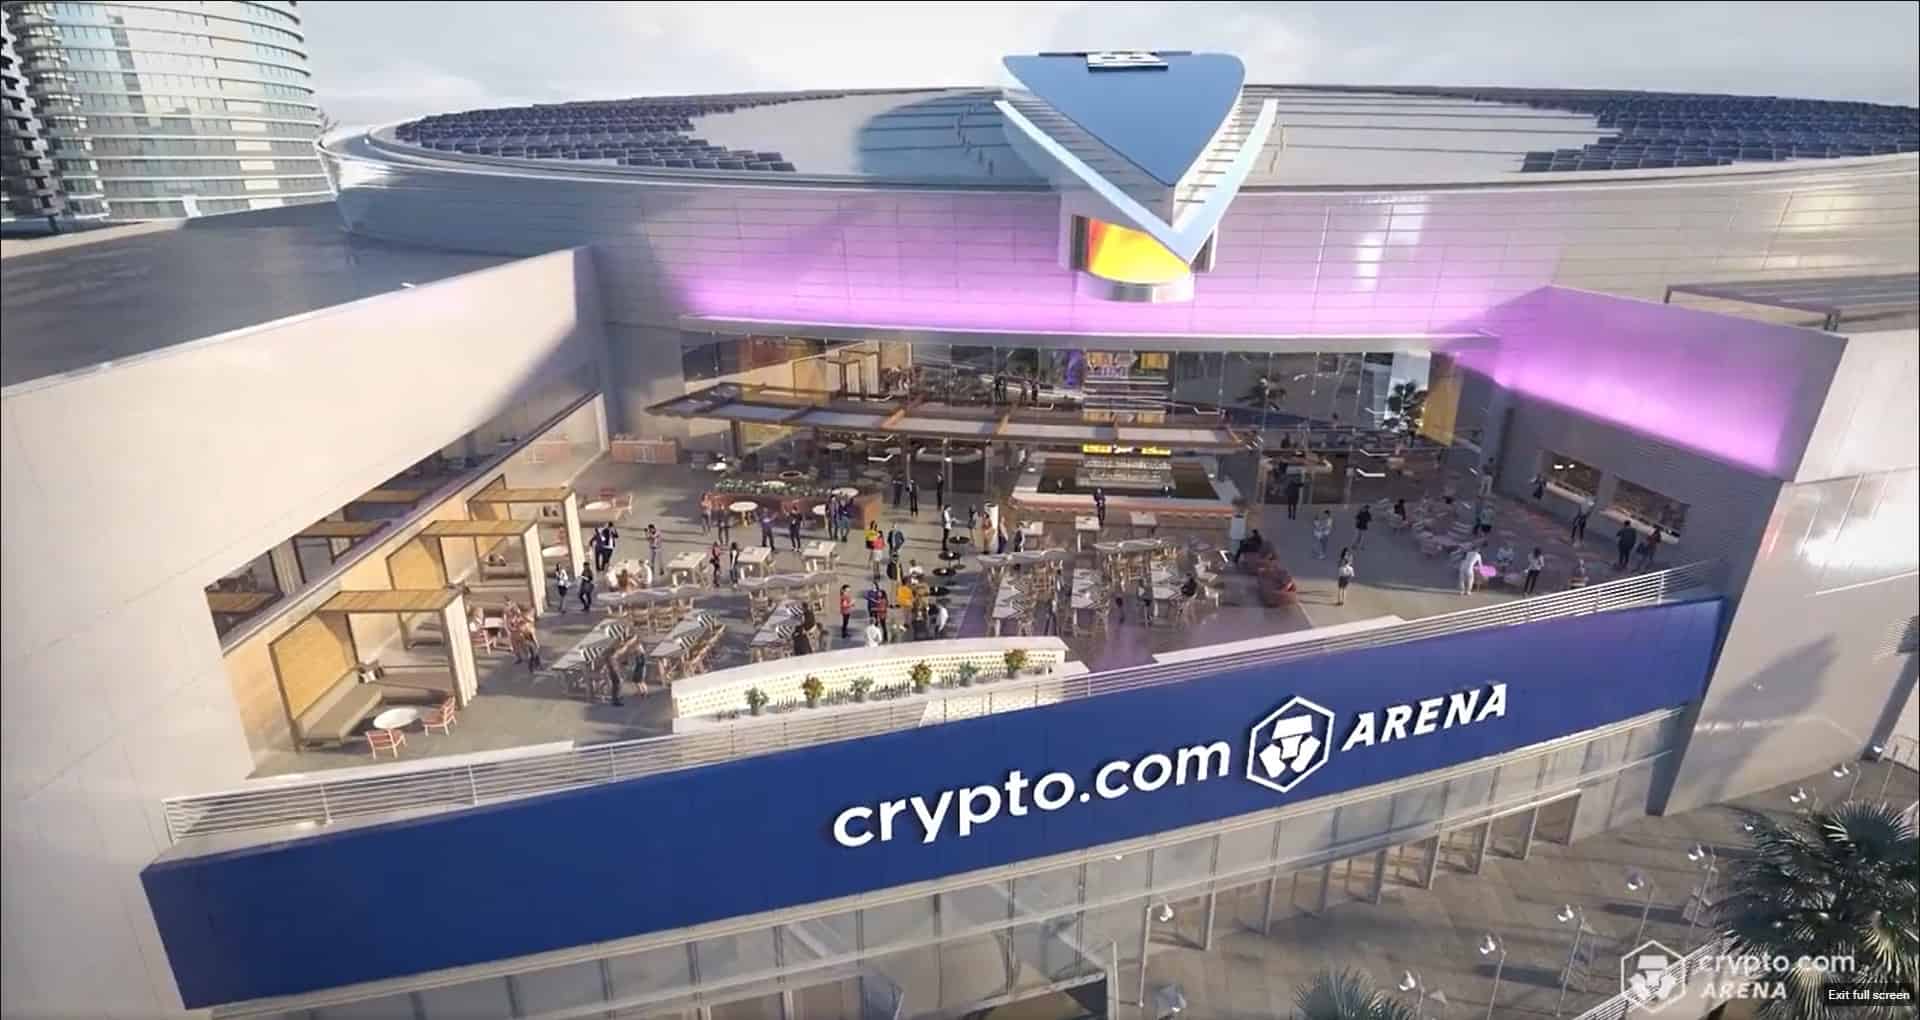 CryptoCom kündigt "Neunstellige Investition" zur Überholung des Stadions an